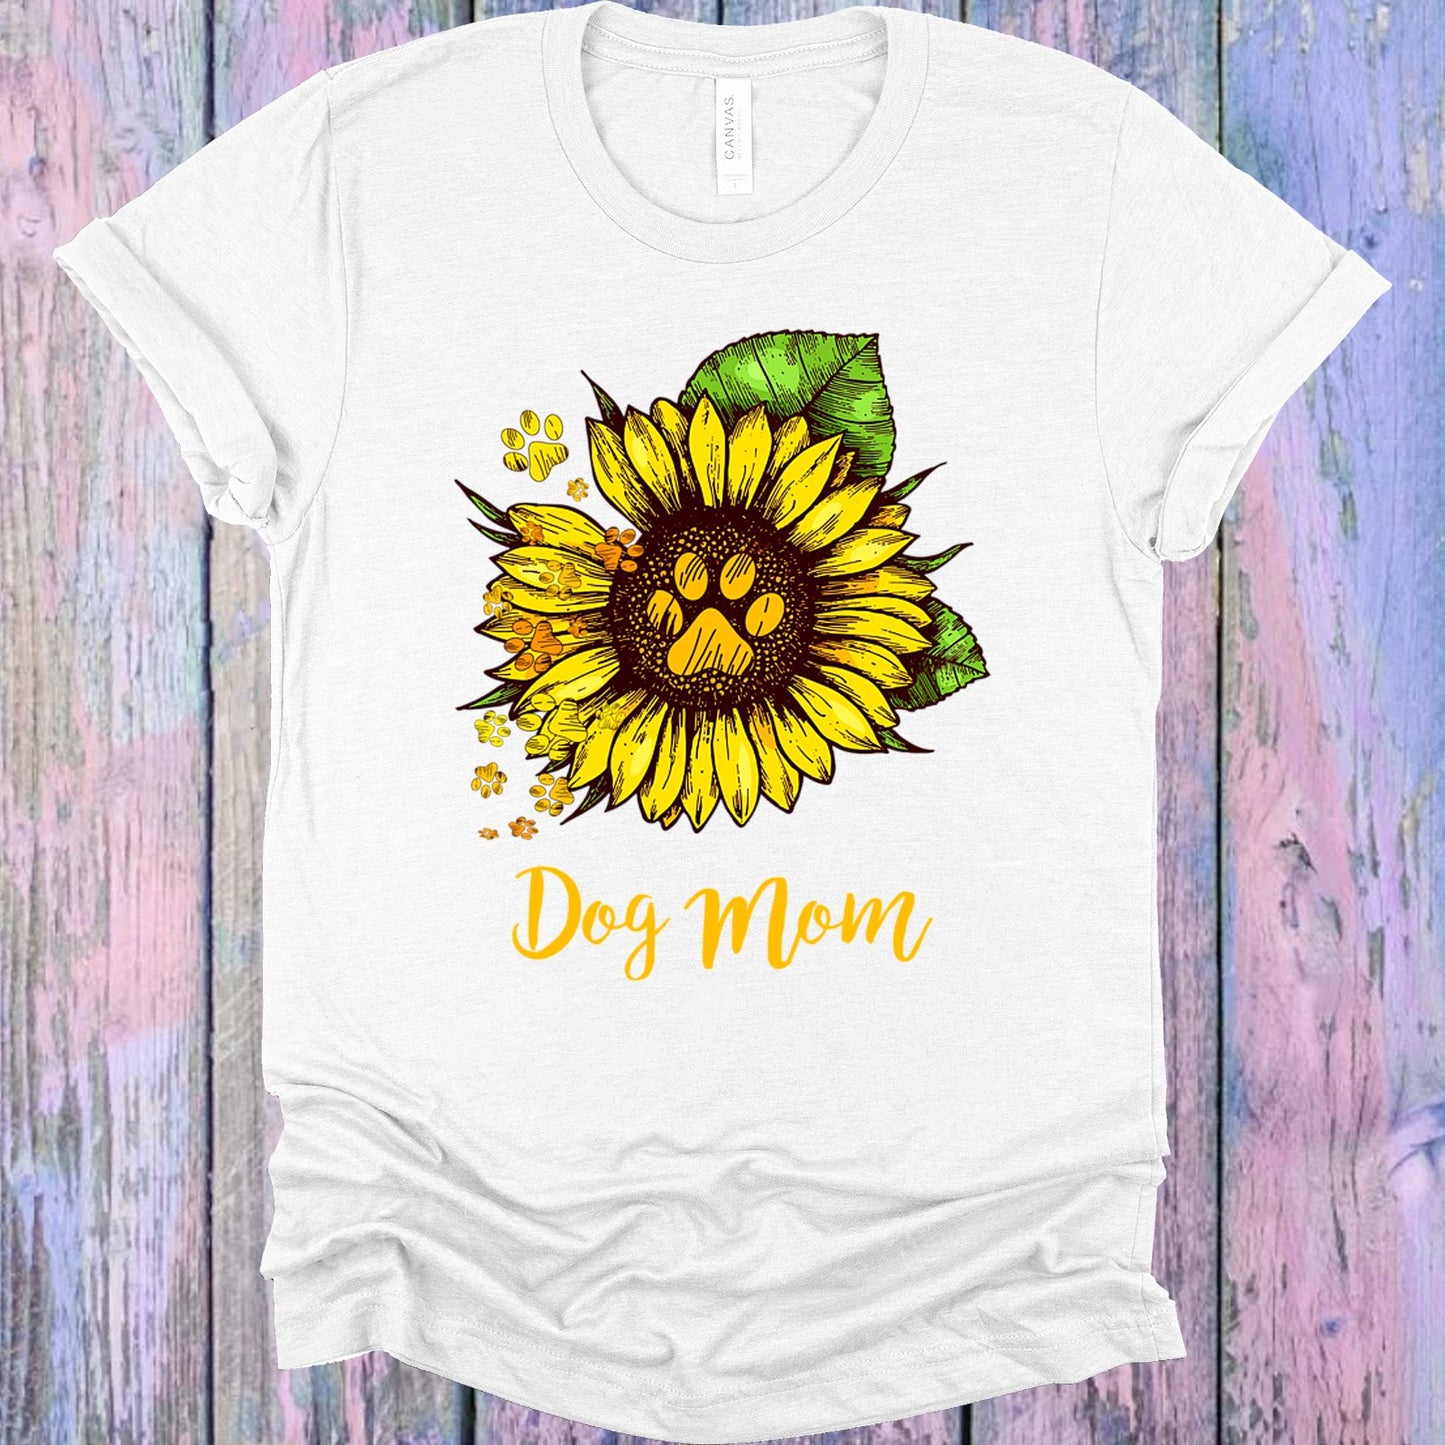 Dog Mom Sunflower Graphic Tee Graphic Tee